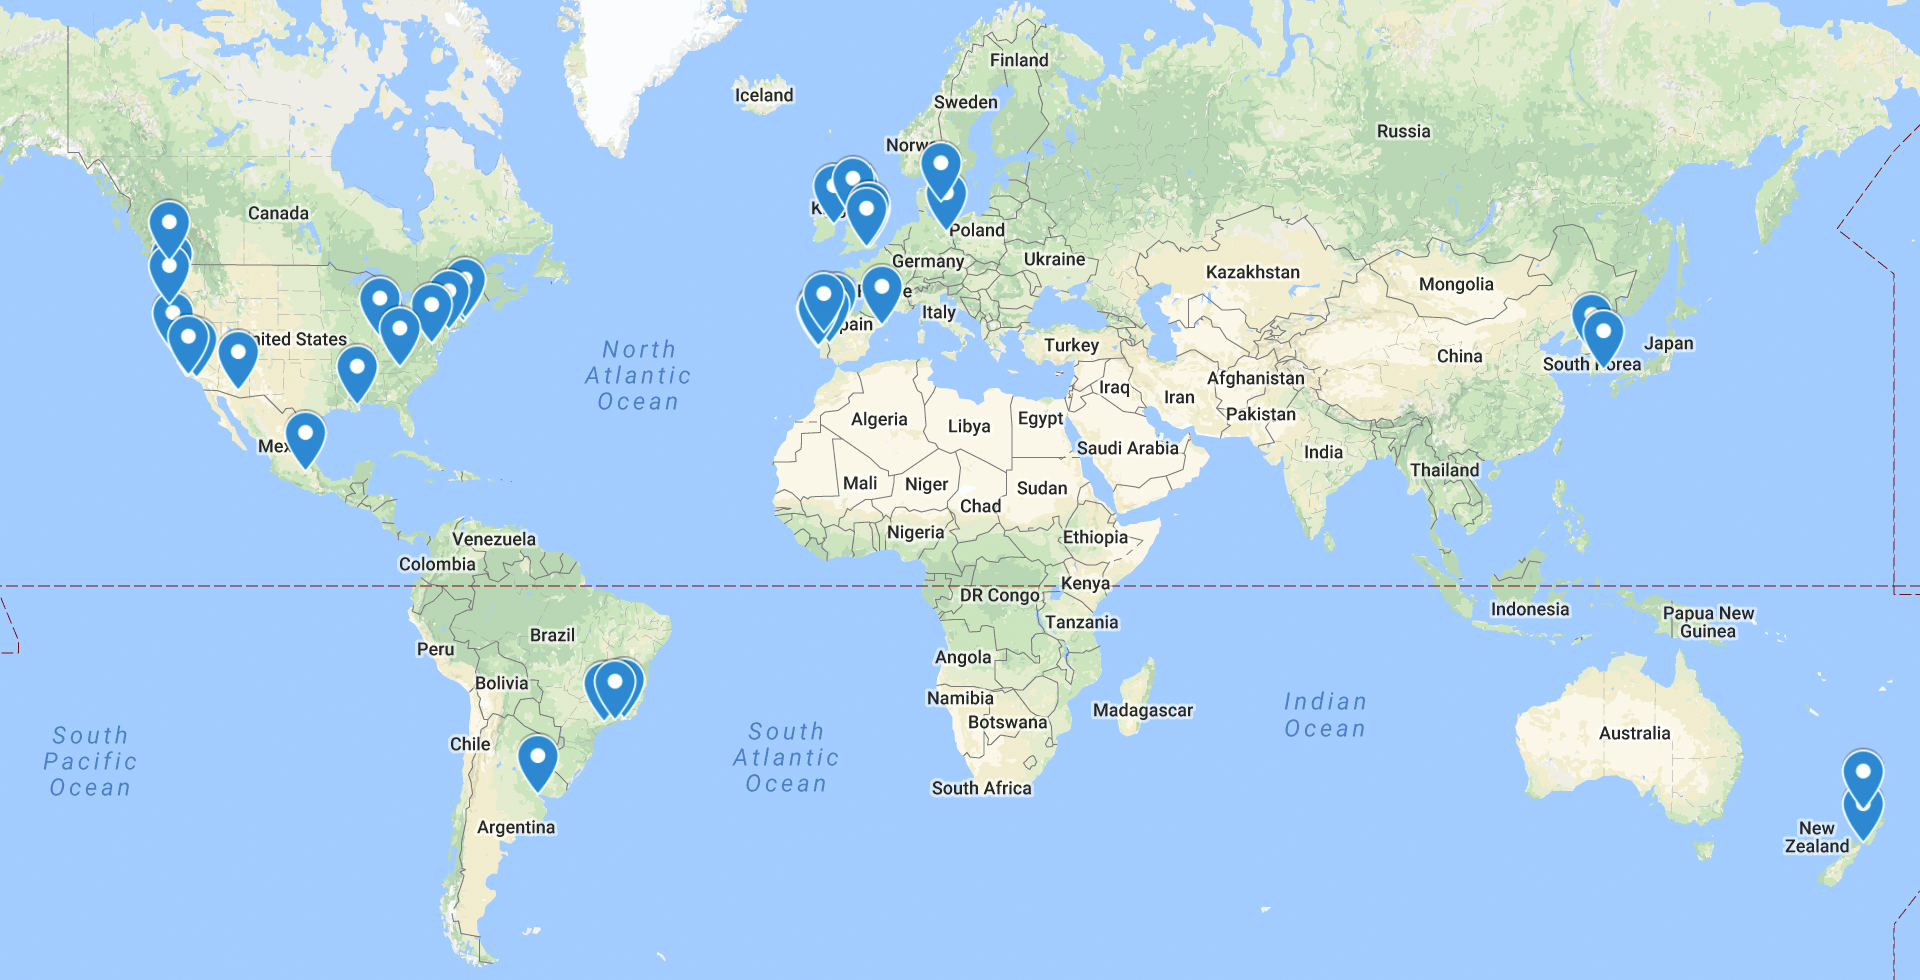 Destinations on our 2017 world tour